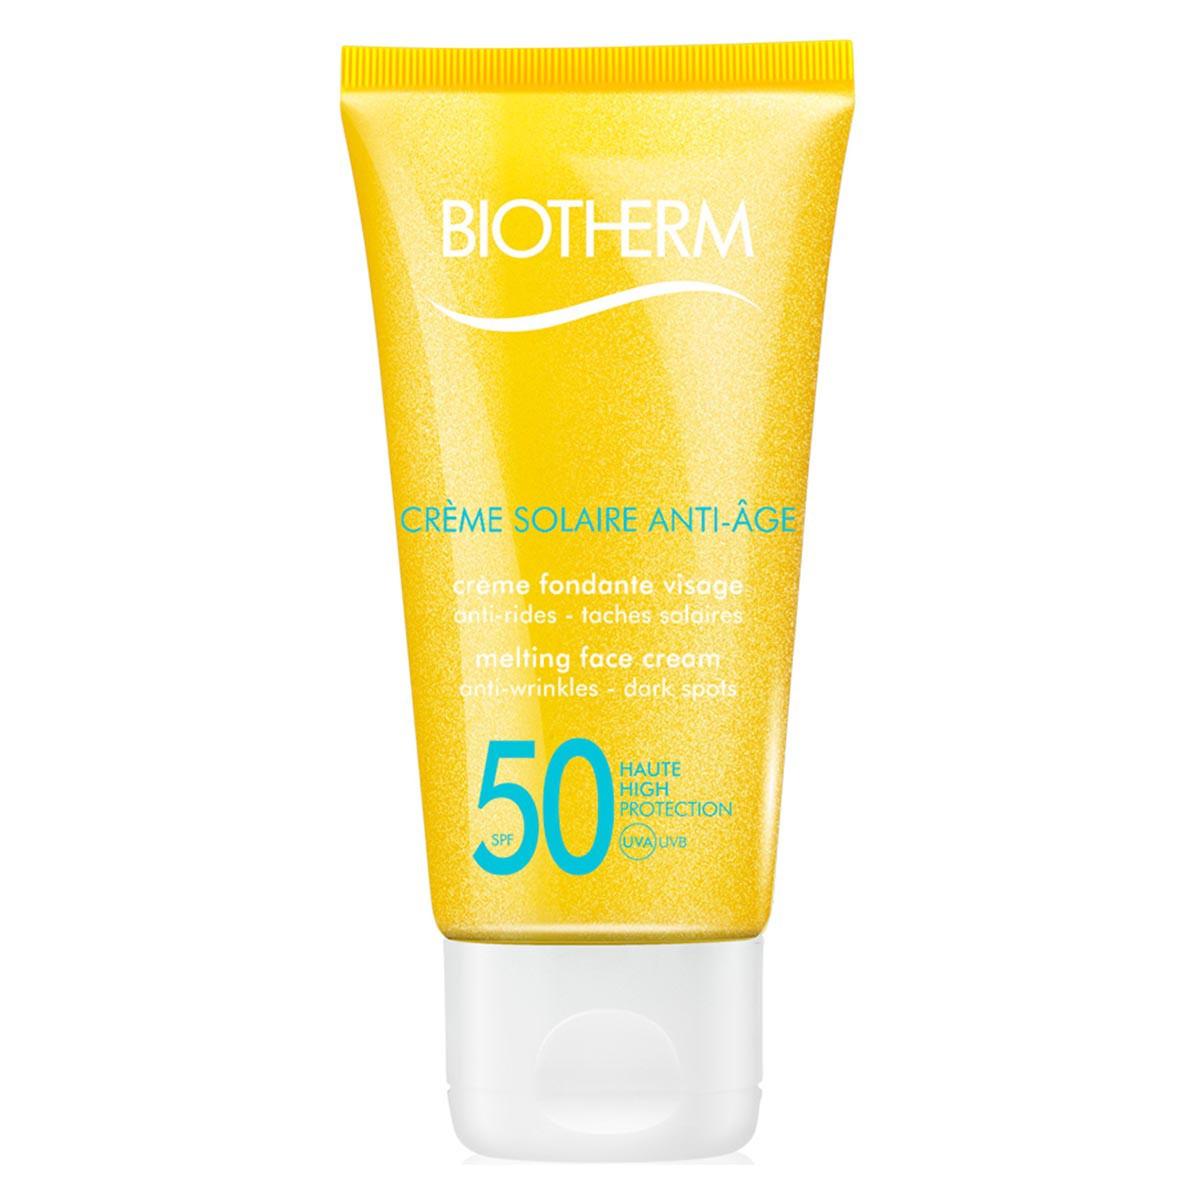 biotherm-spf50-creme-solaire-anti-age-50ml-sun-protector